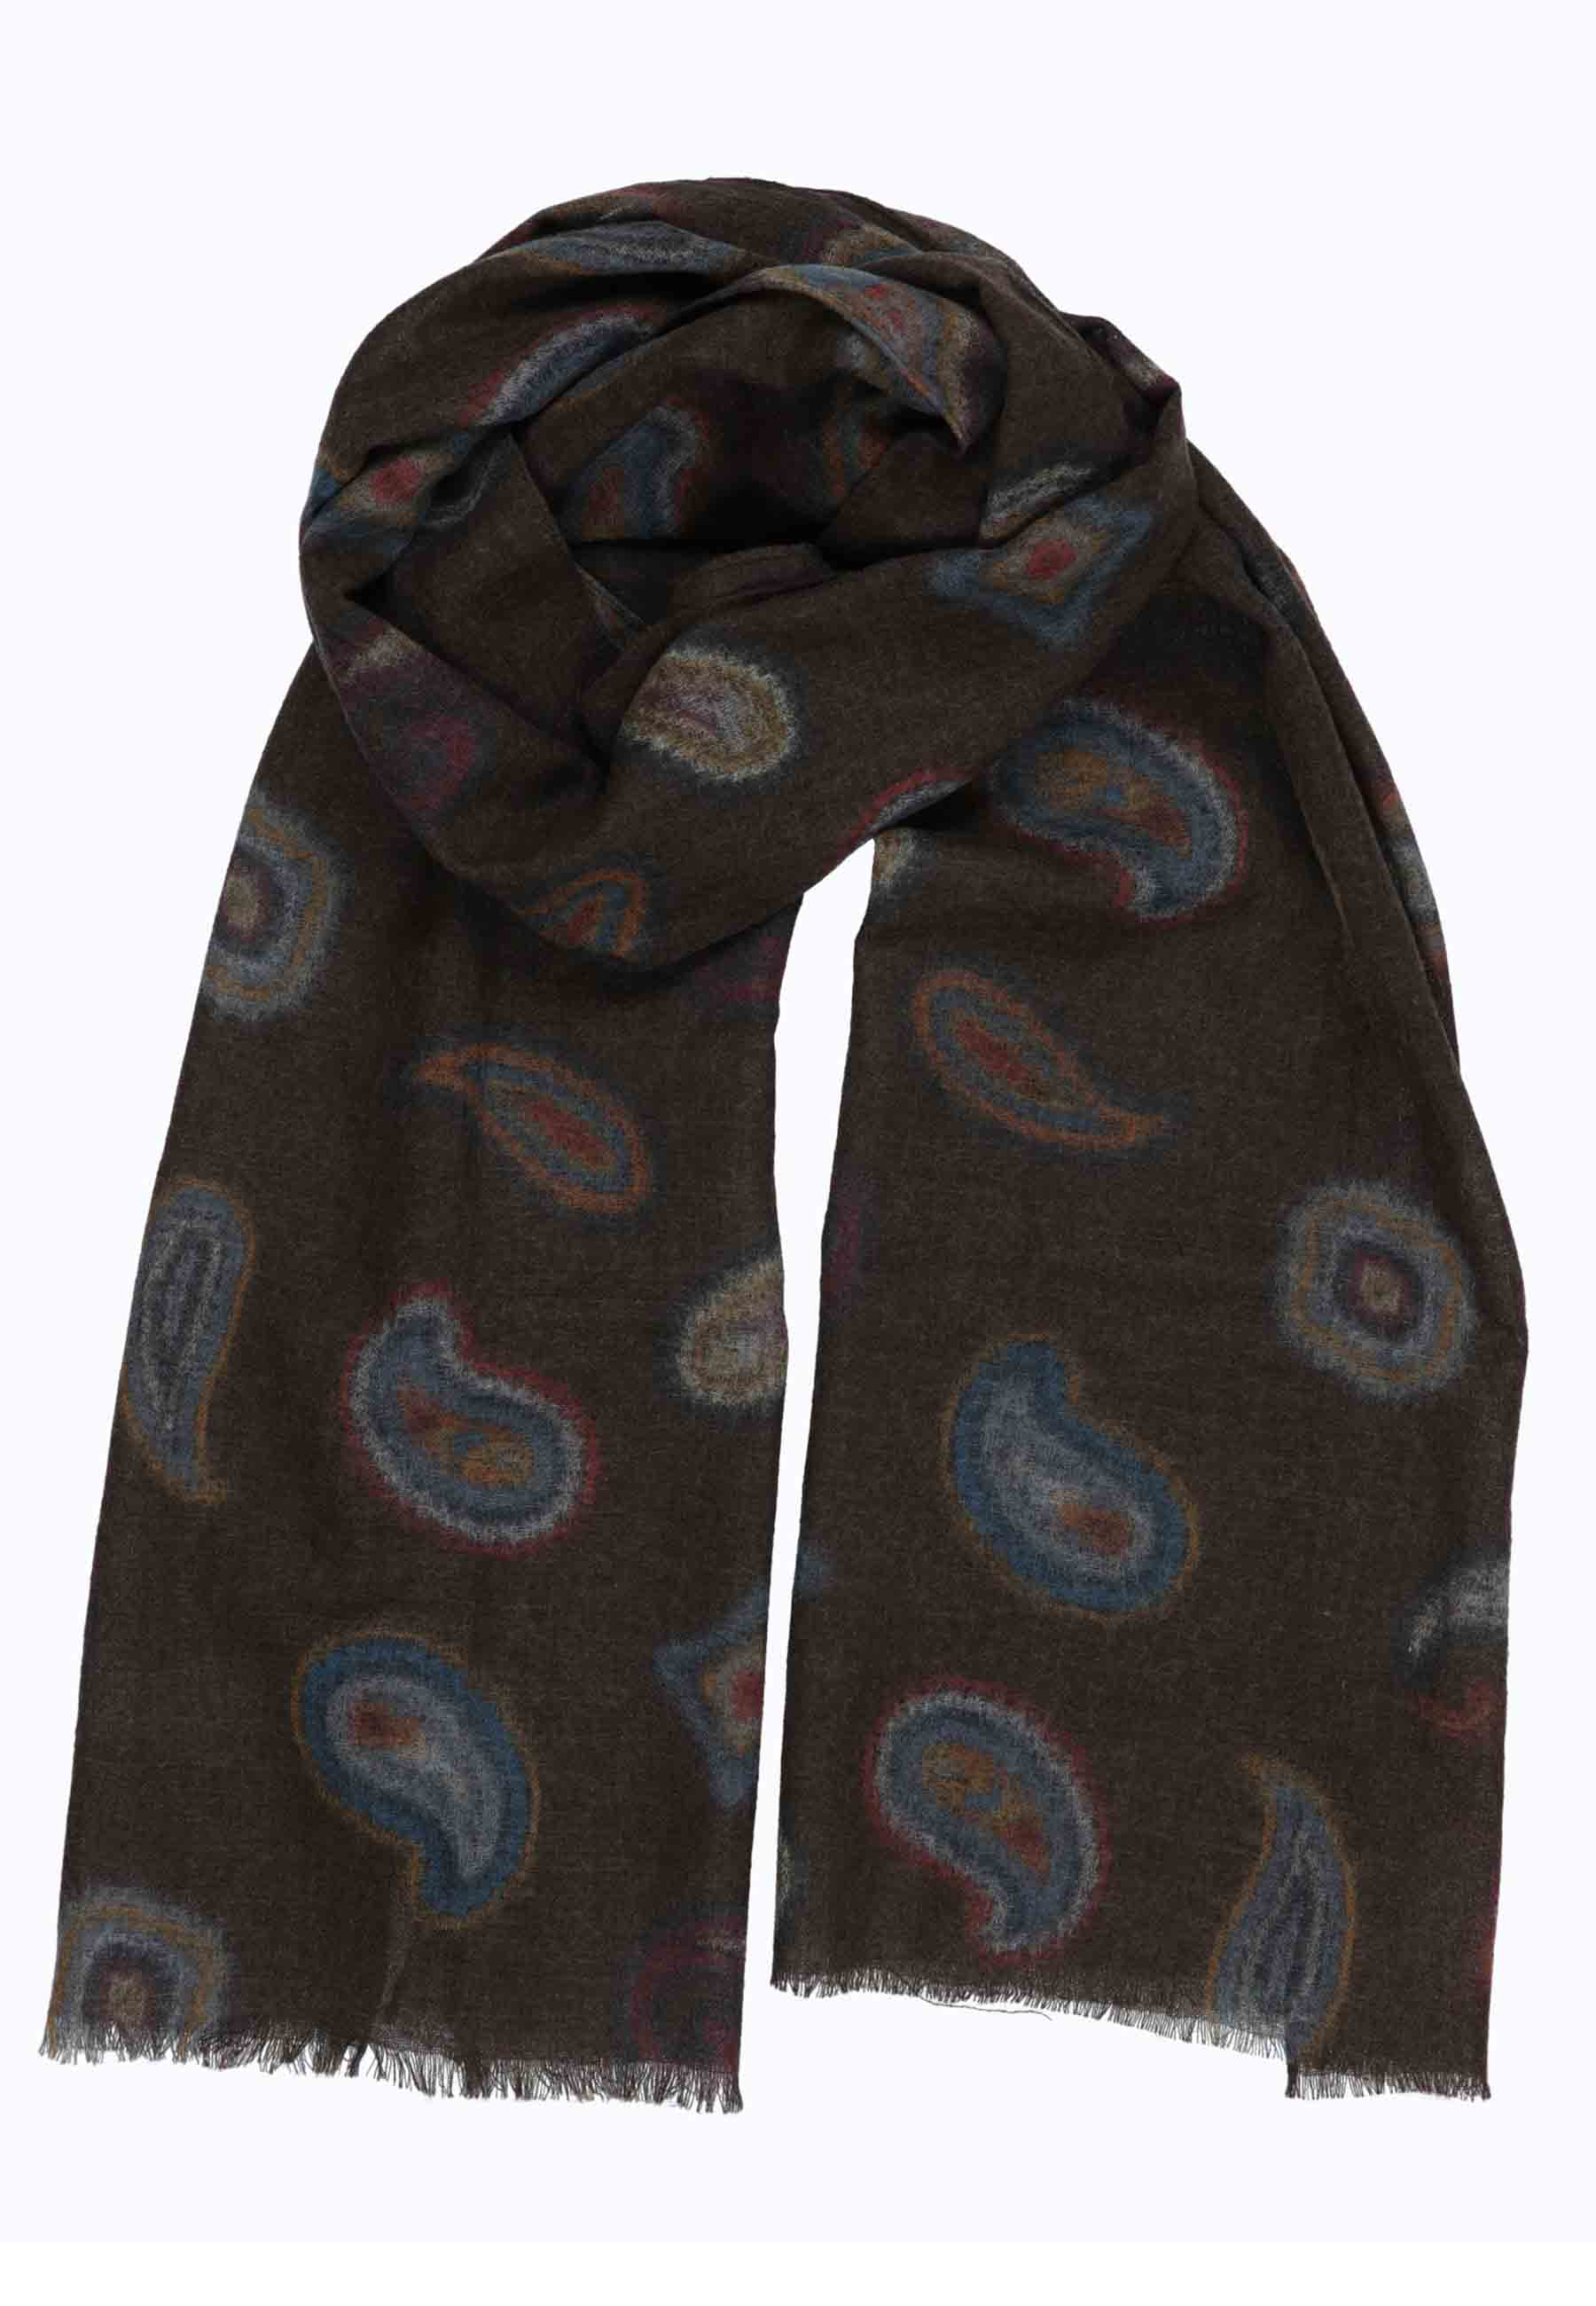 Cashmere patterned dark brown wool scarves